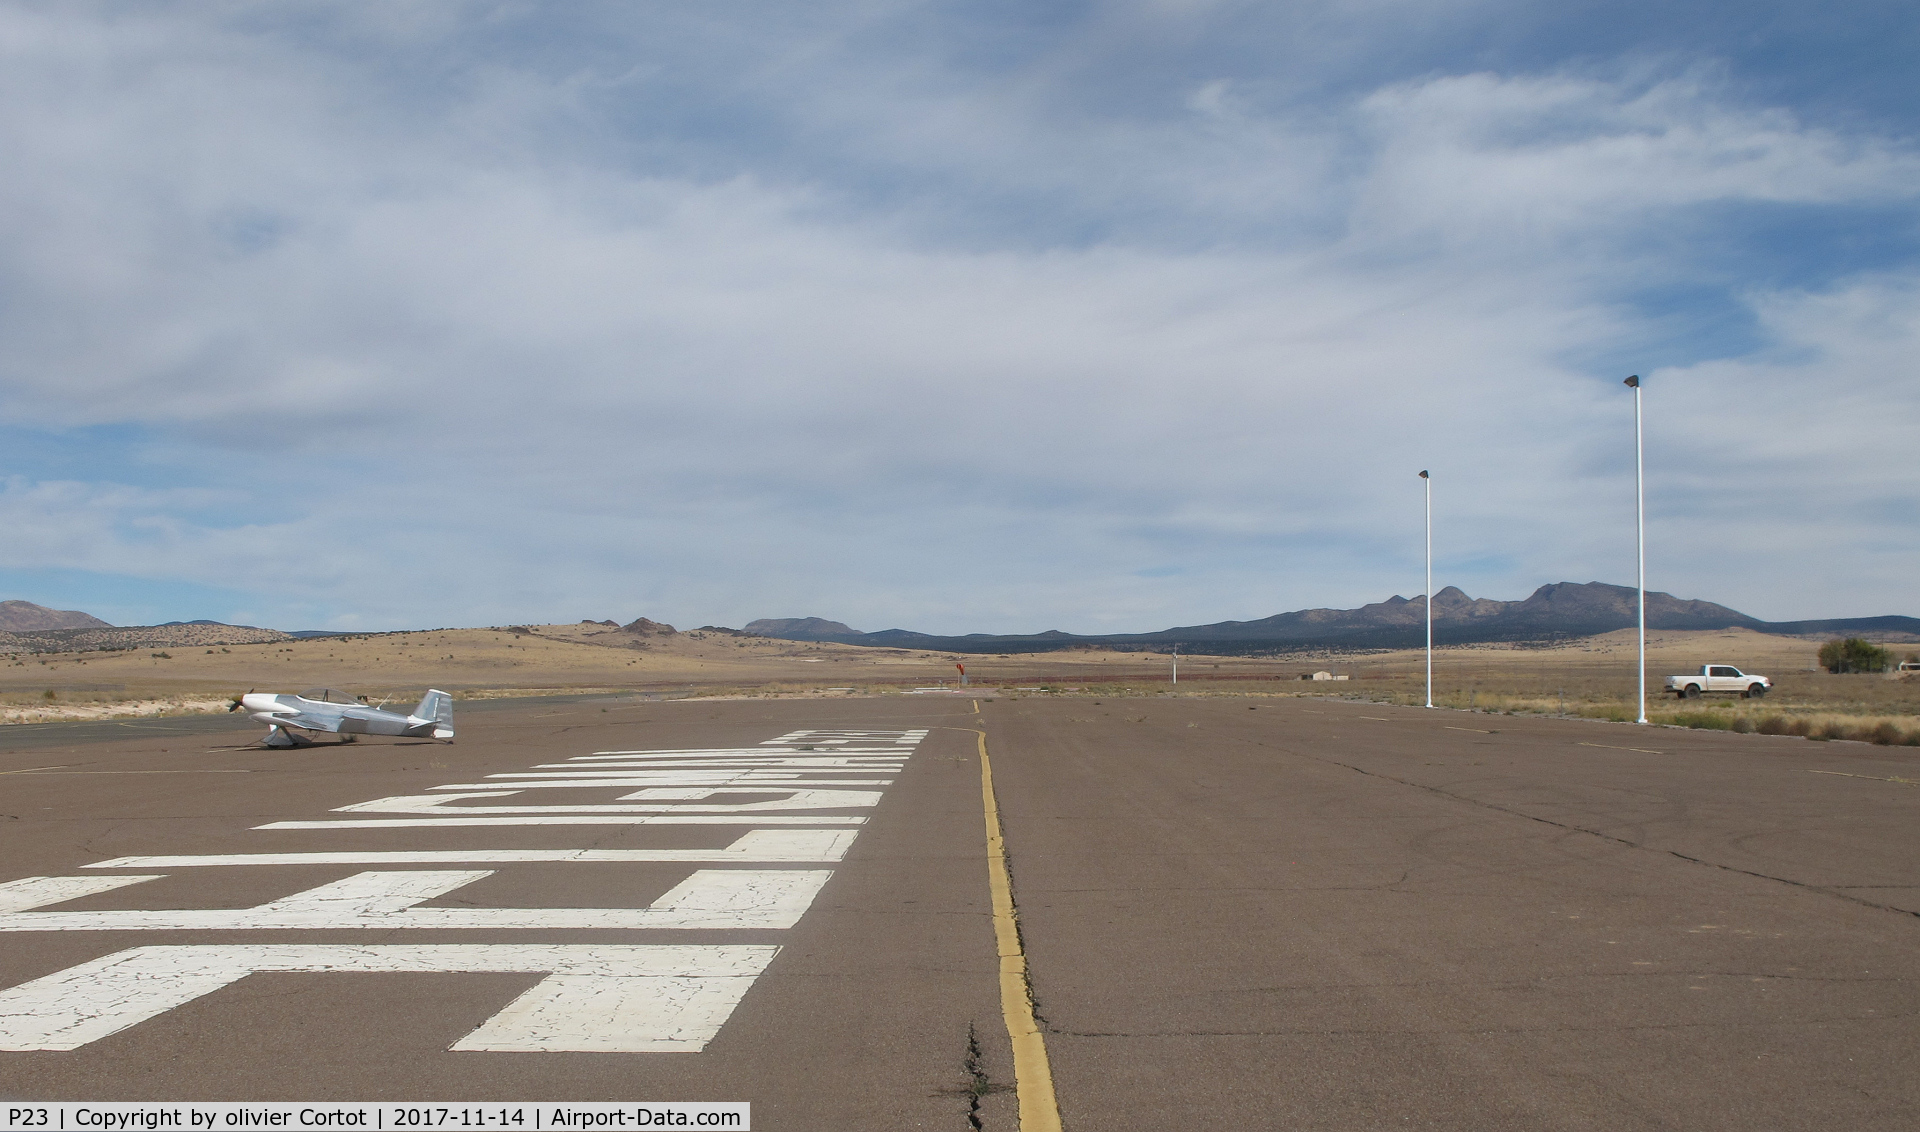 Seligman Airport (P23) - the tarmac